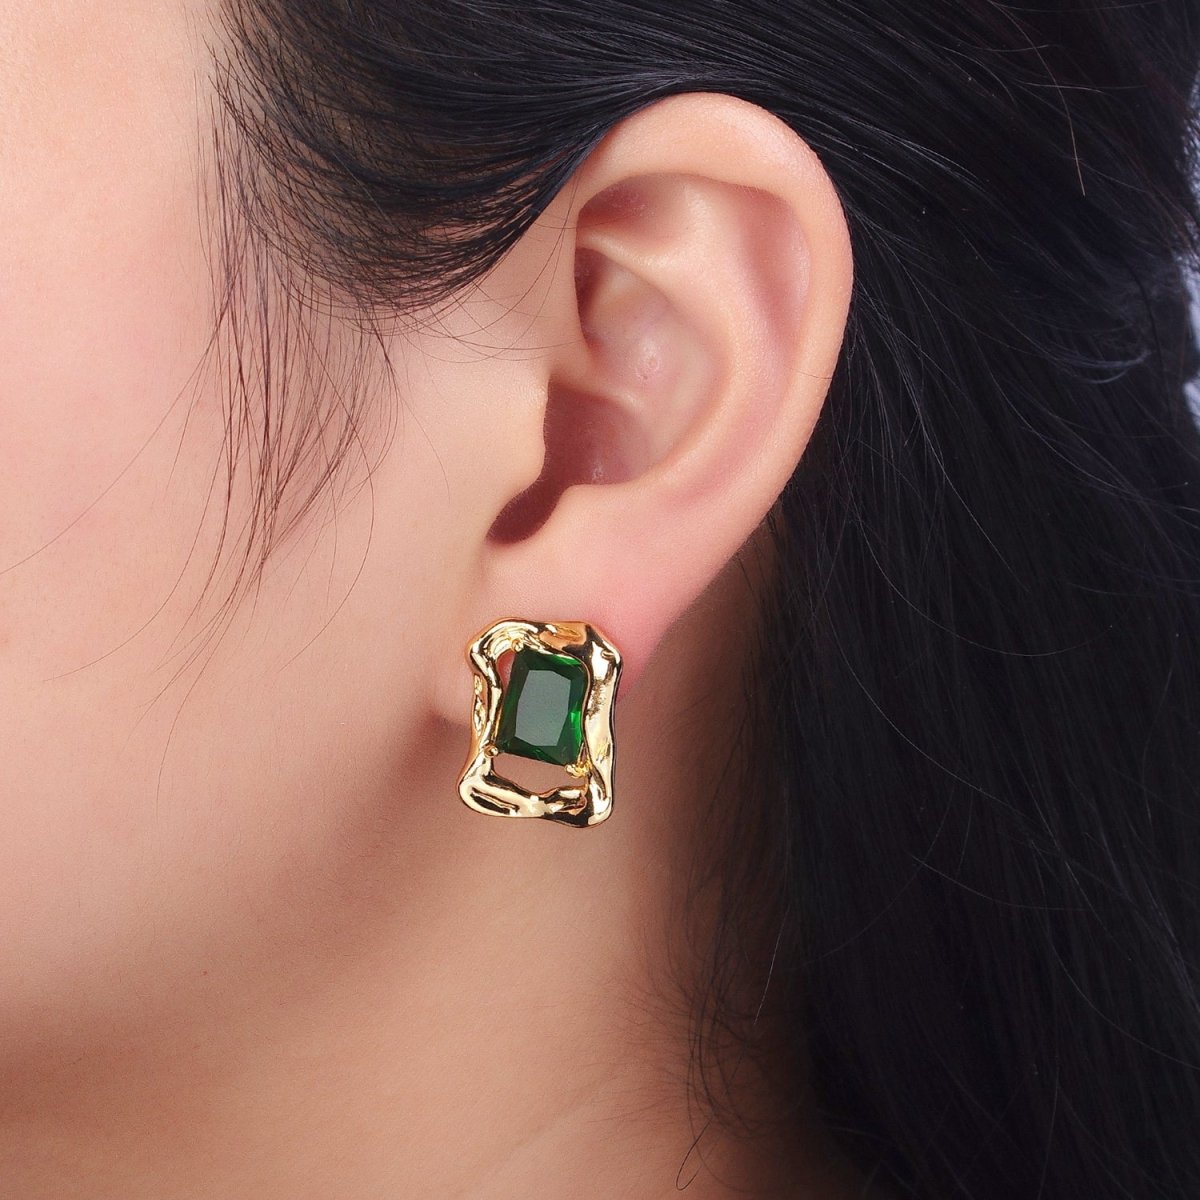 Green, Red, Blue CZ Baguette Geometric Gold Framed Stud Earrings | AB134 - AB136 - DLUXCA